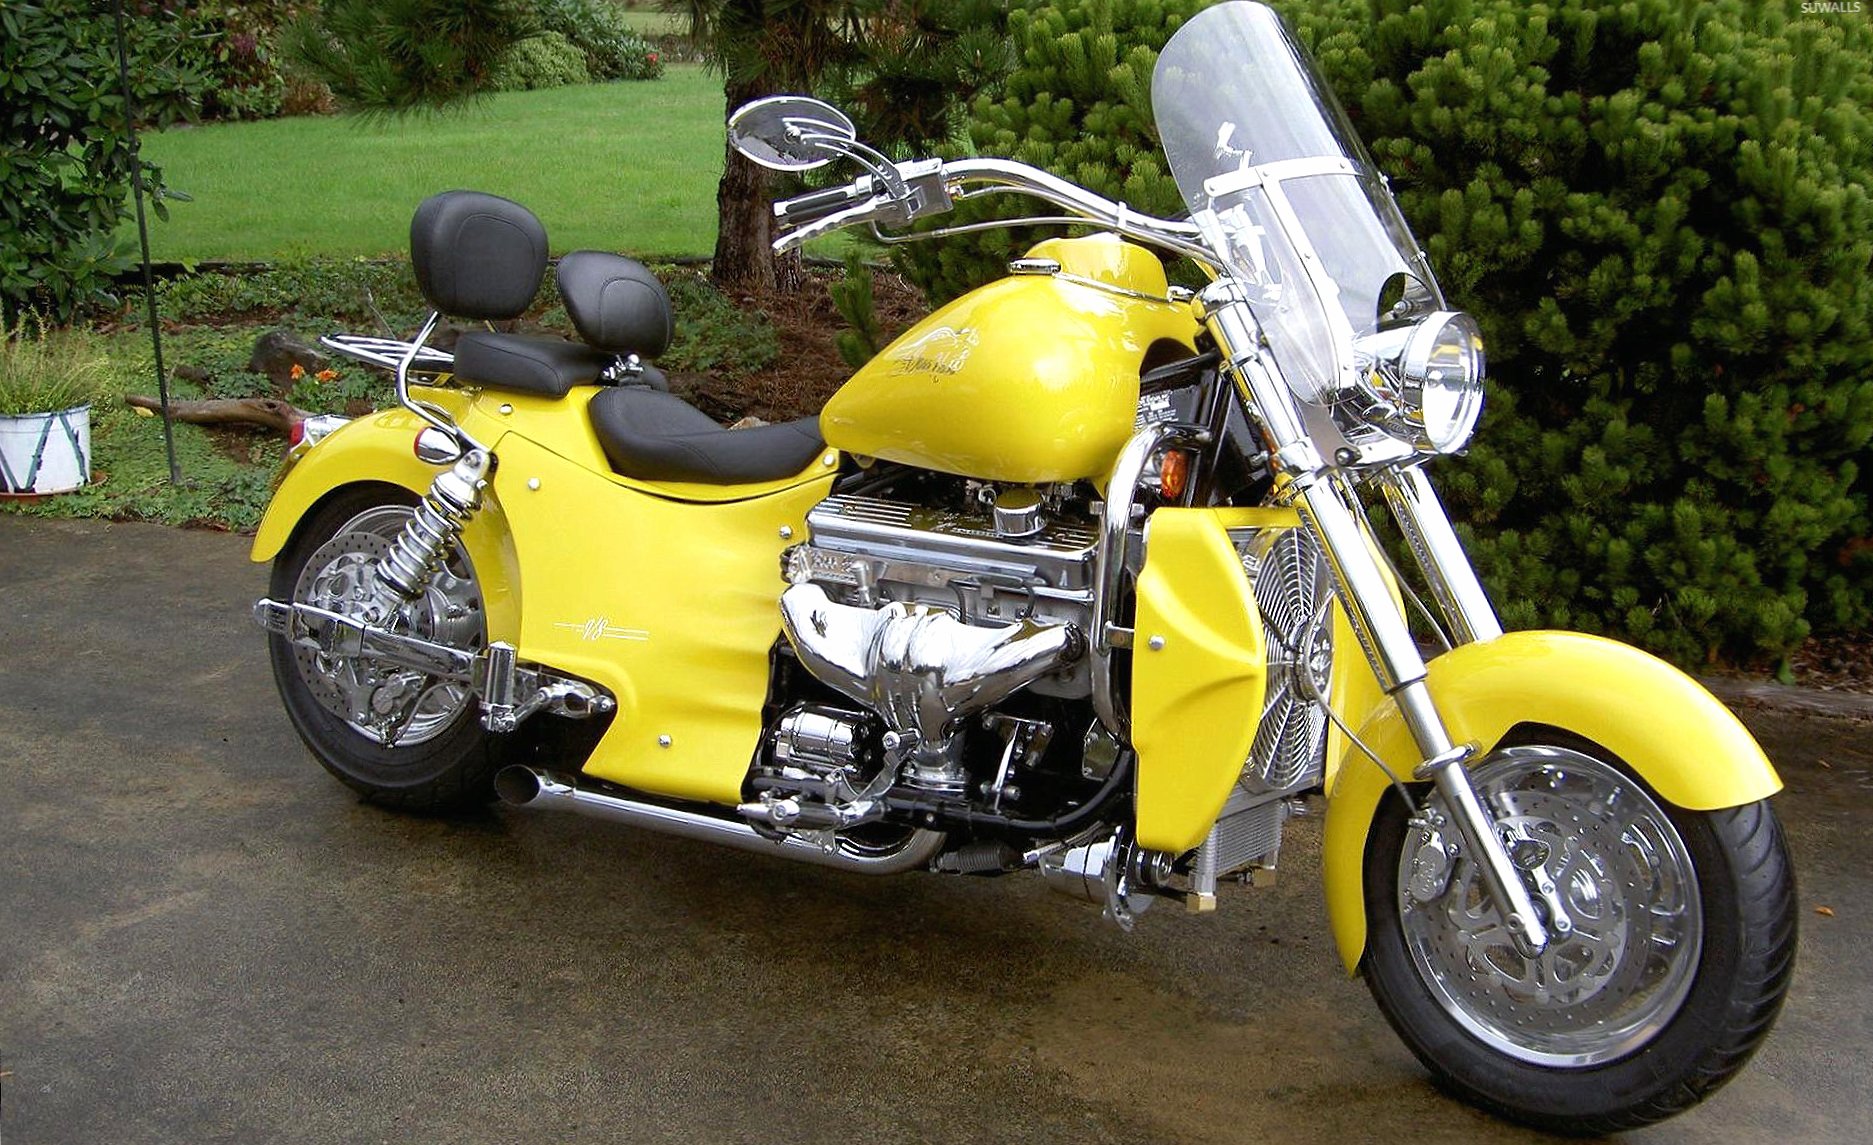 Harley Davidson motorbike at 1024 x 1024 iPad size wallpapers HD quality